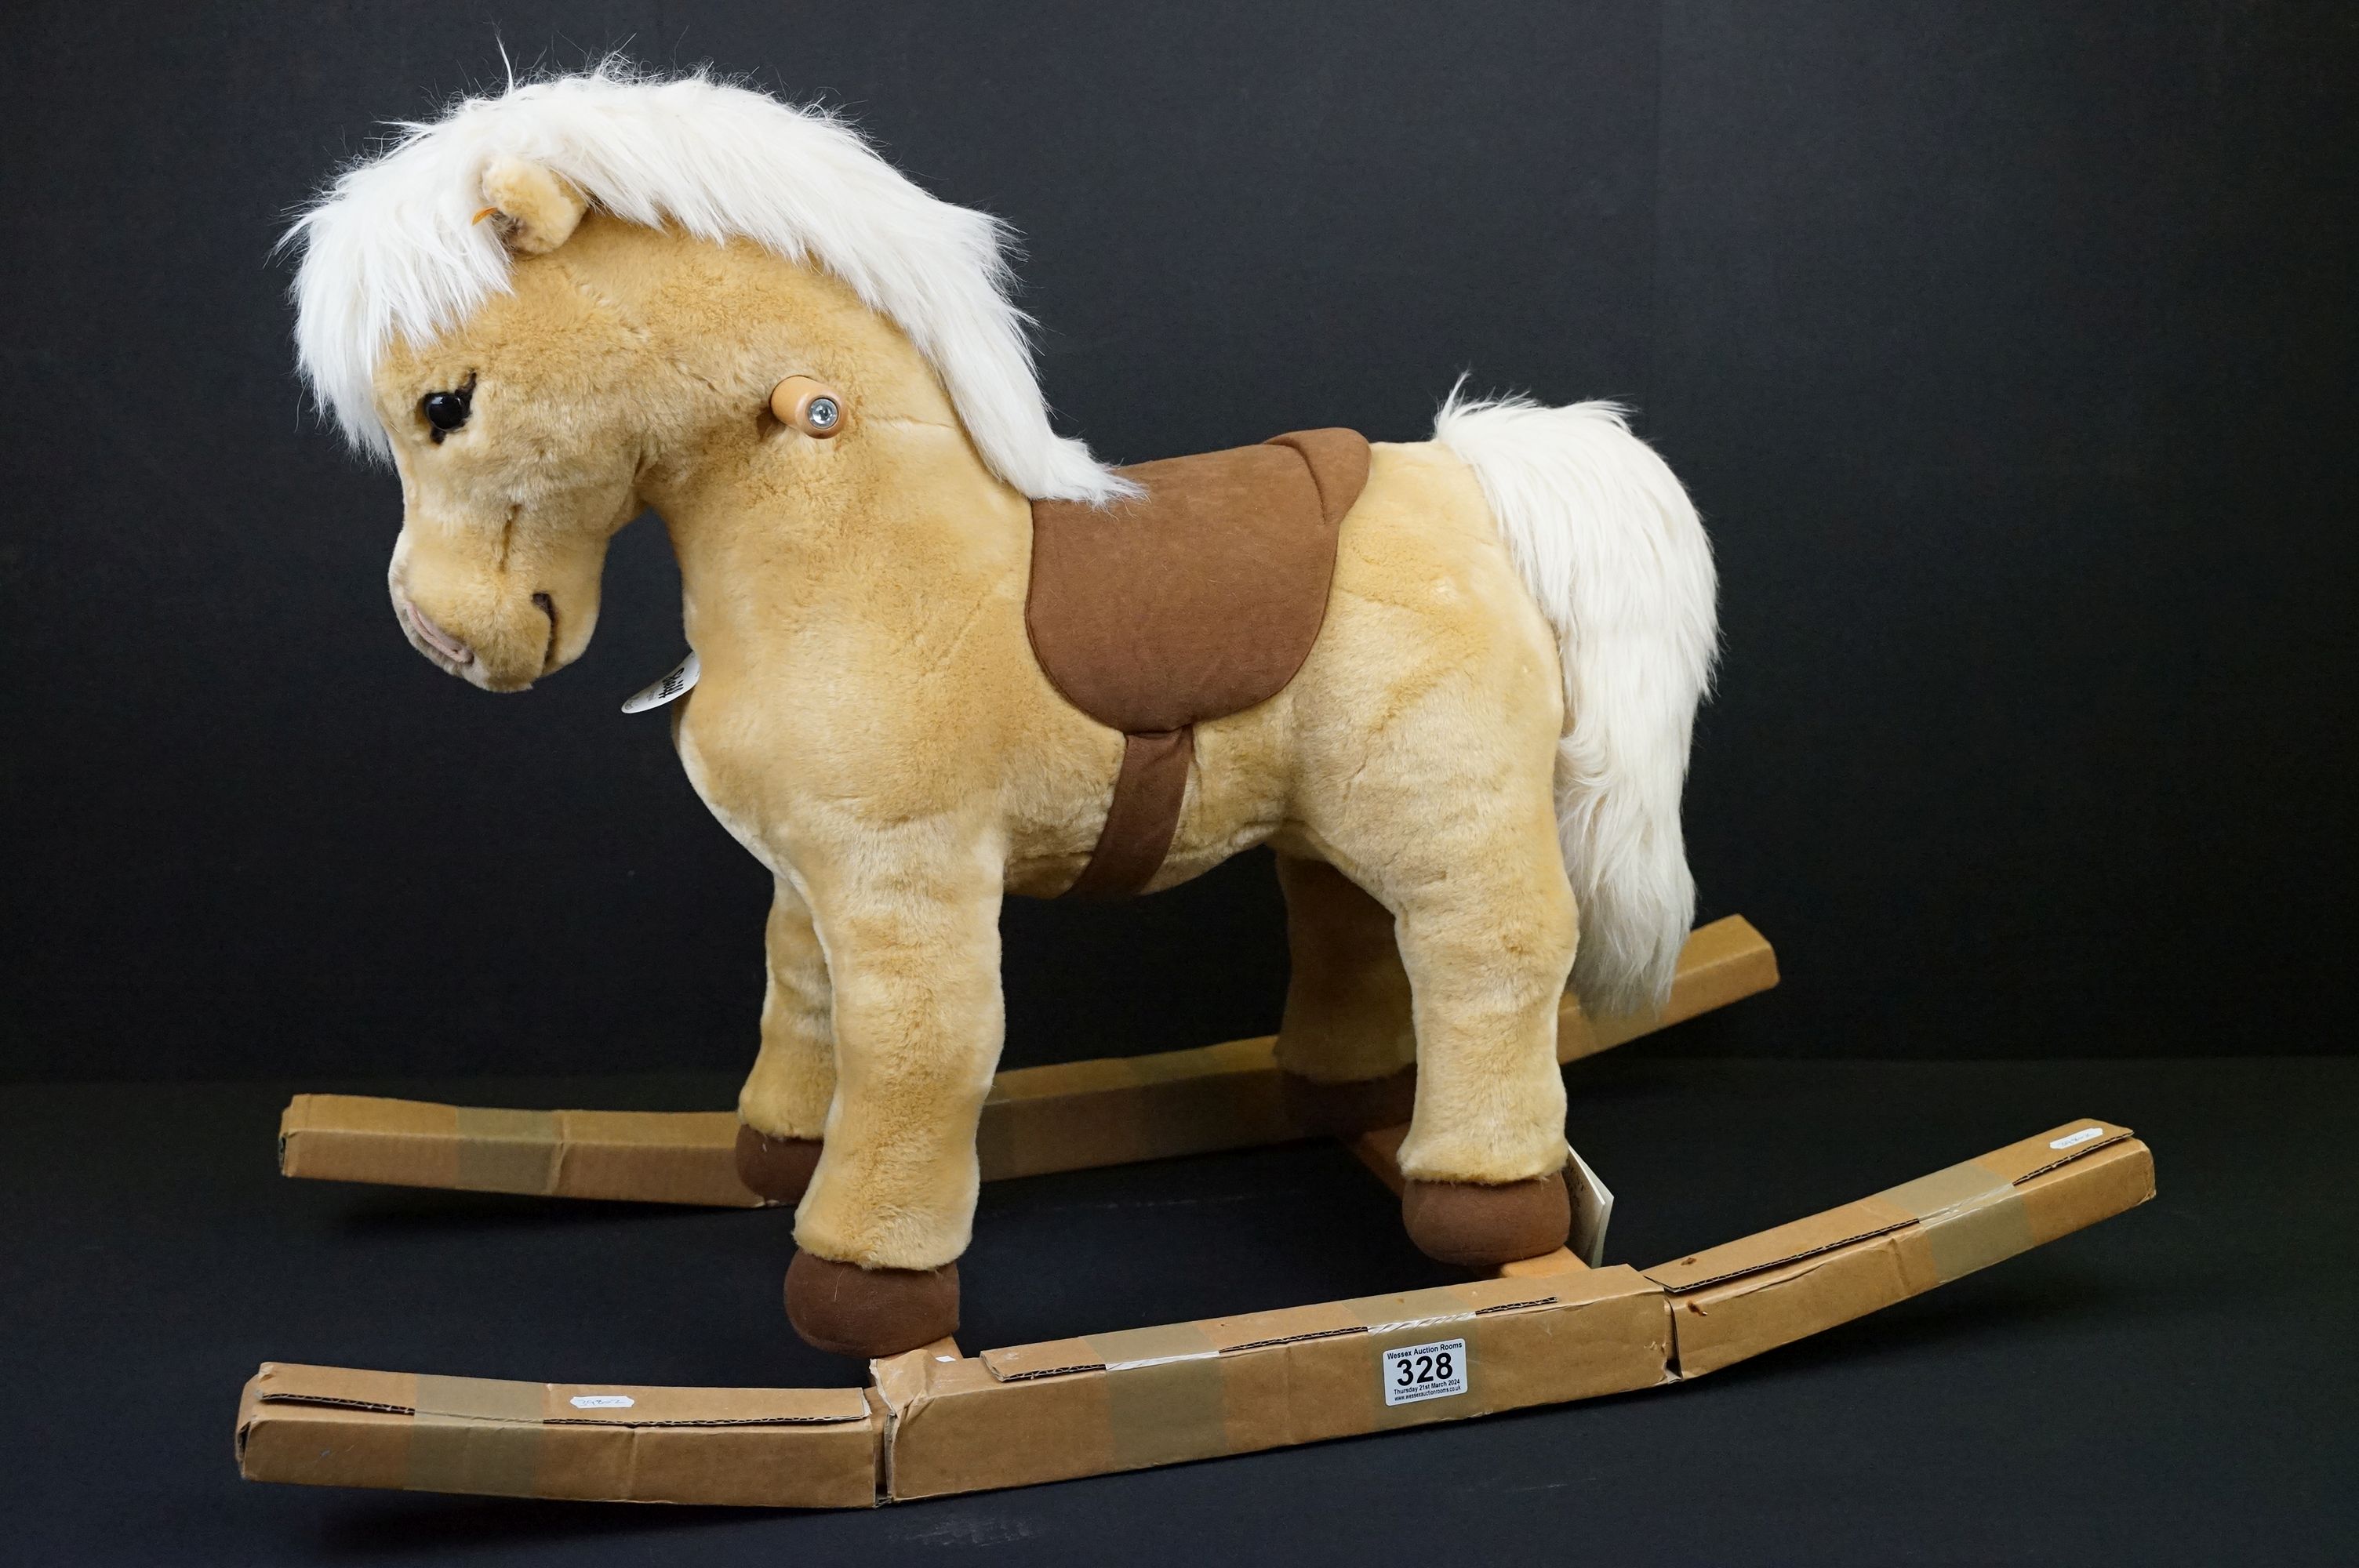 Steiff Rocking horse Franzi Model (048906) 70cm high Blonde plush on bow rockers engraved with